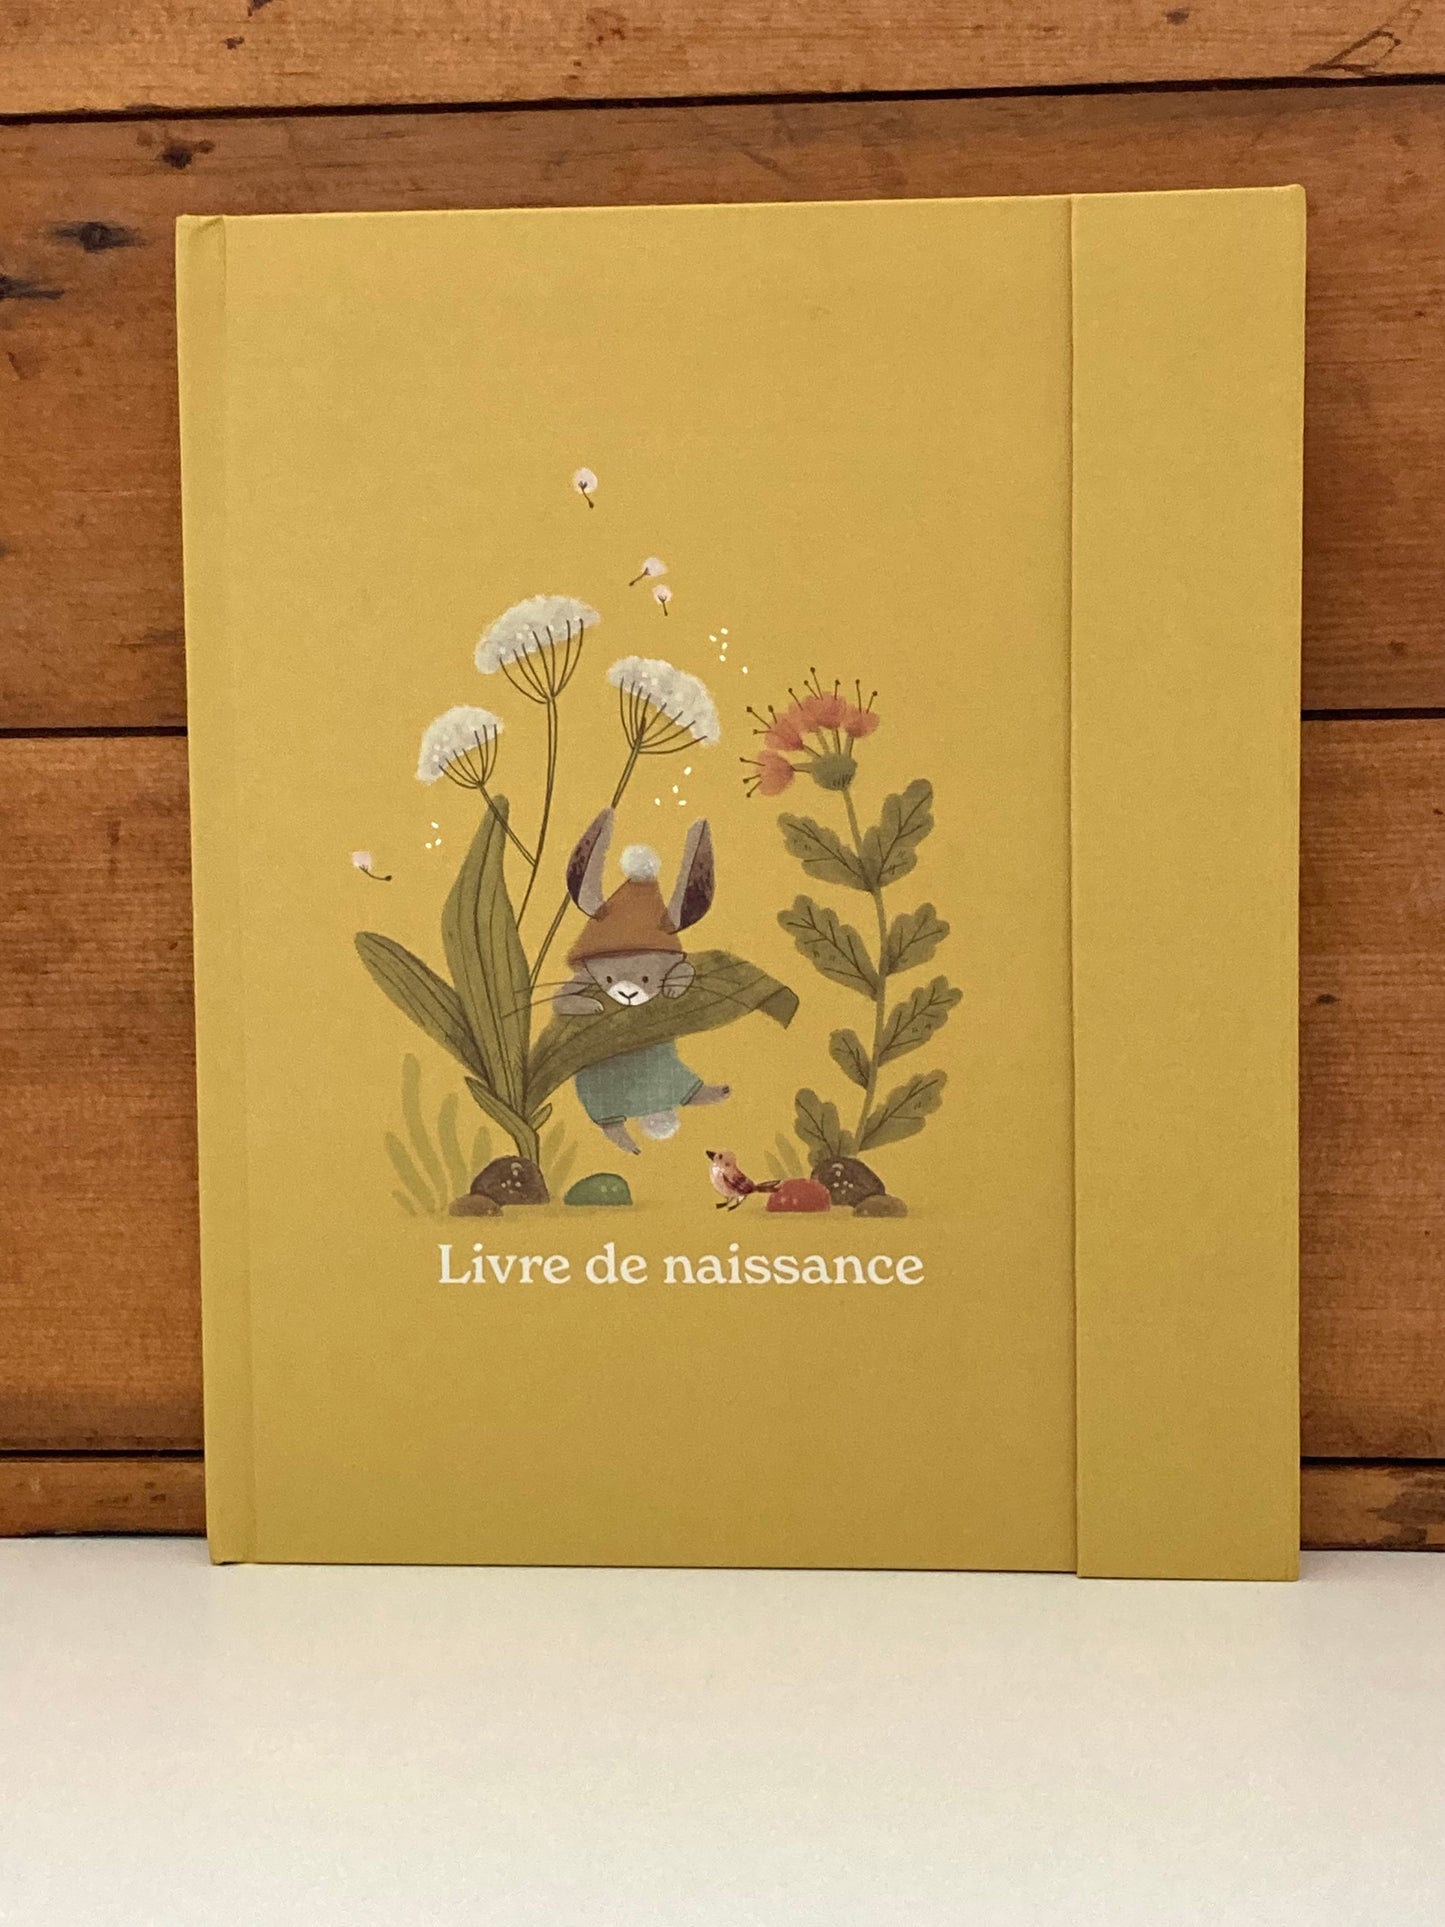 Baby Memory Book - LIVRE DE NAISSANCE … en français!